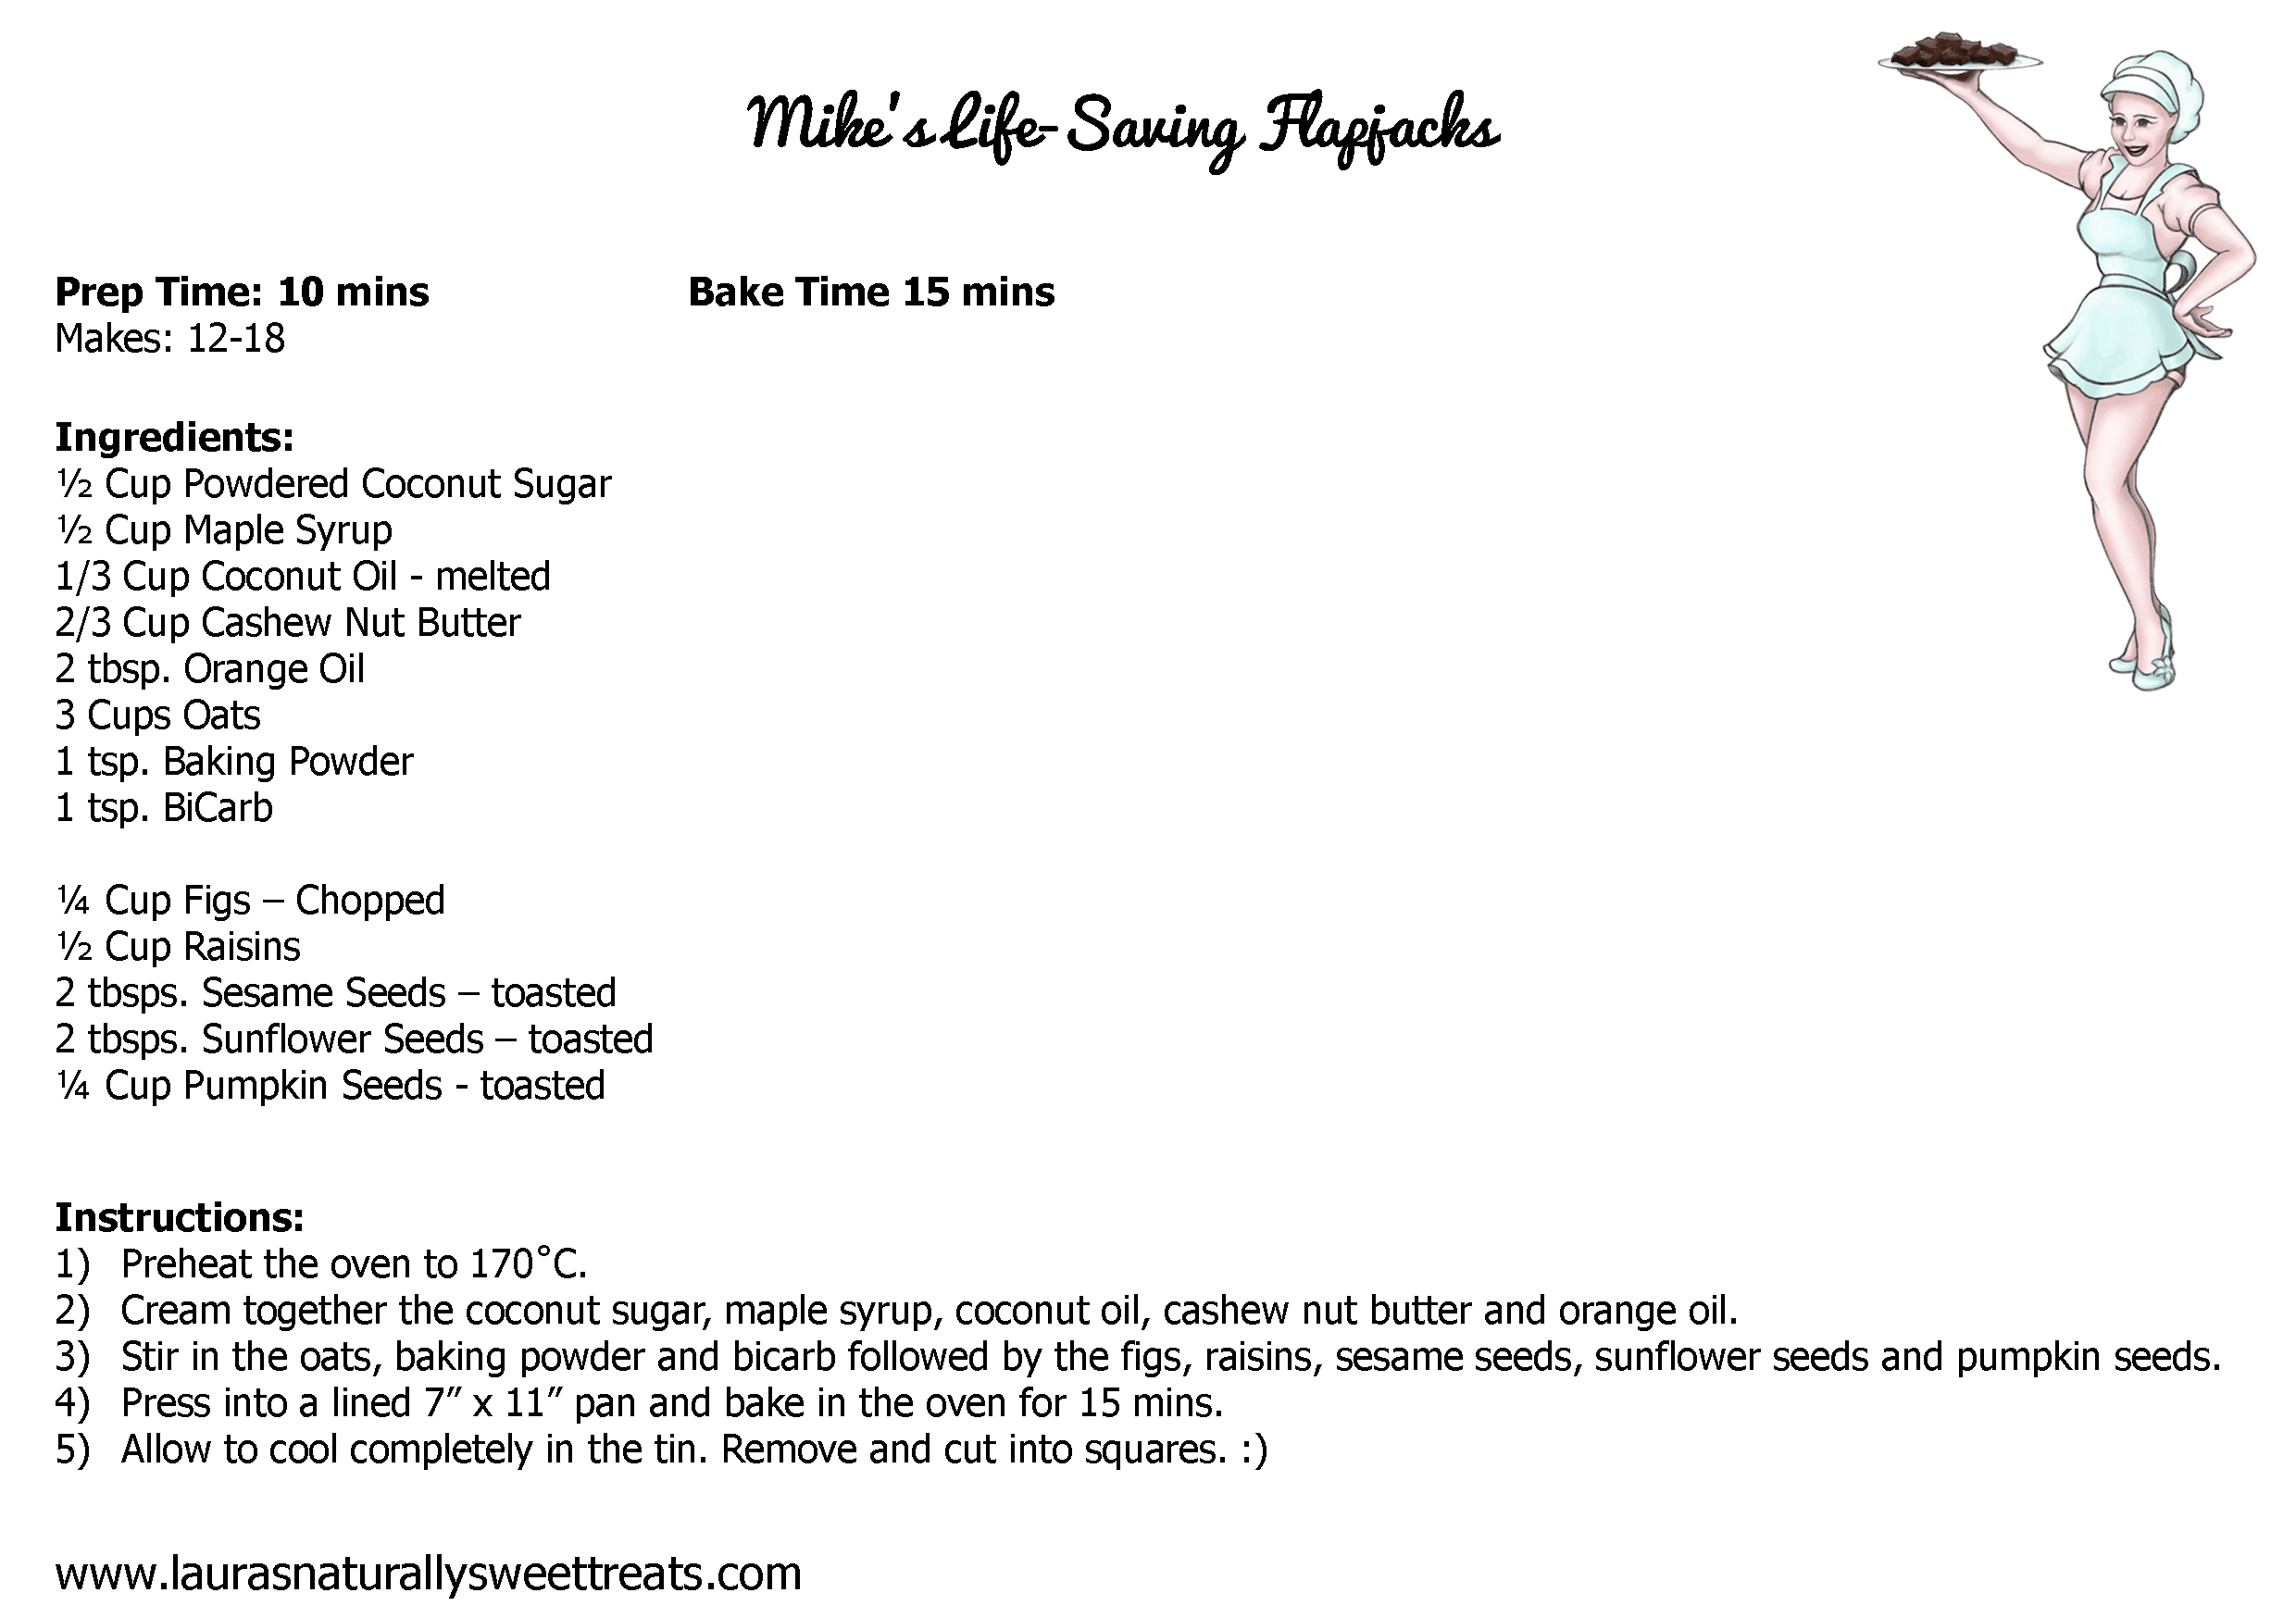 mikes life saving flapjacks recipe card